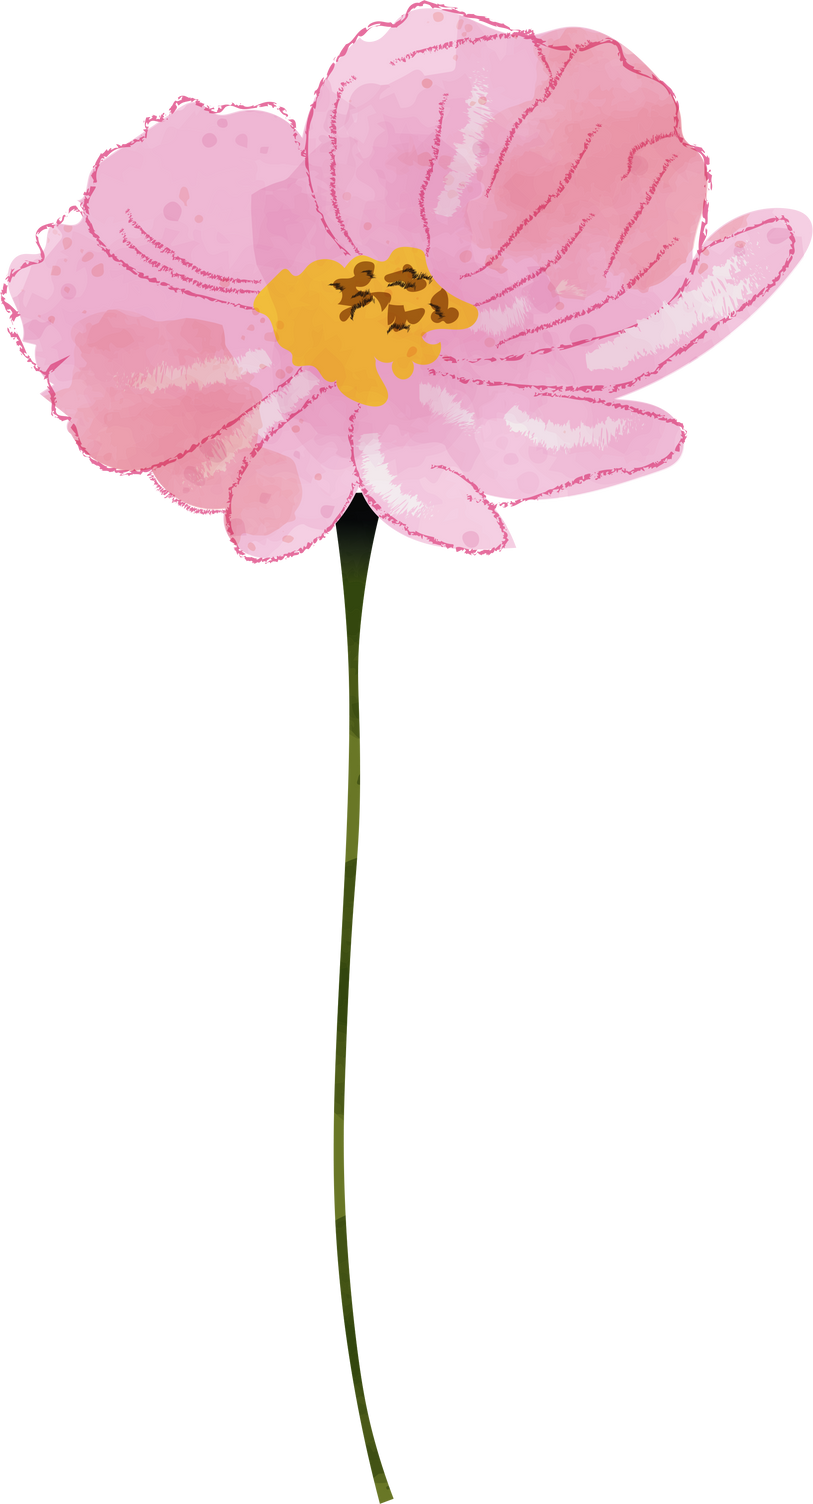 Watercolor flower